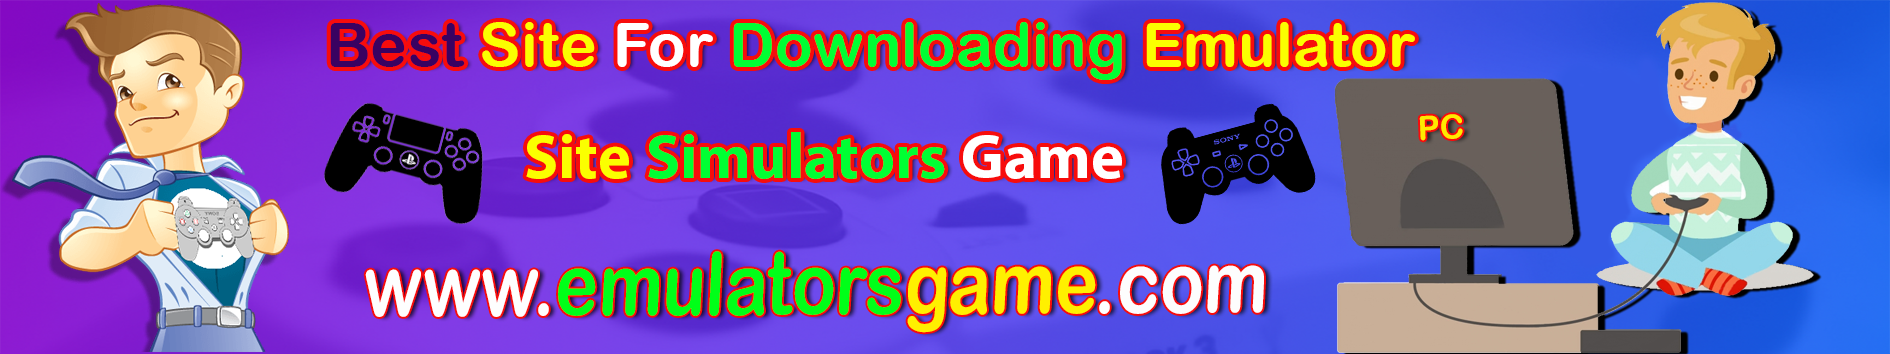 xbox 360 emulator ps3 download cfw